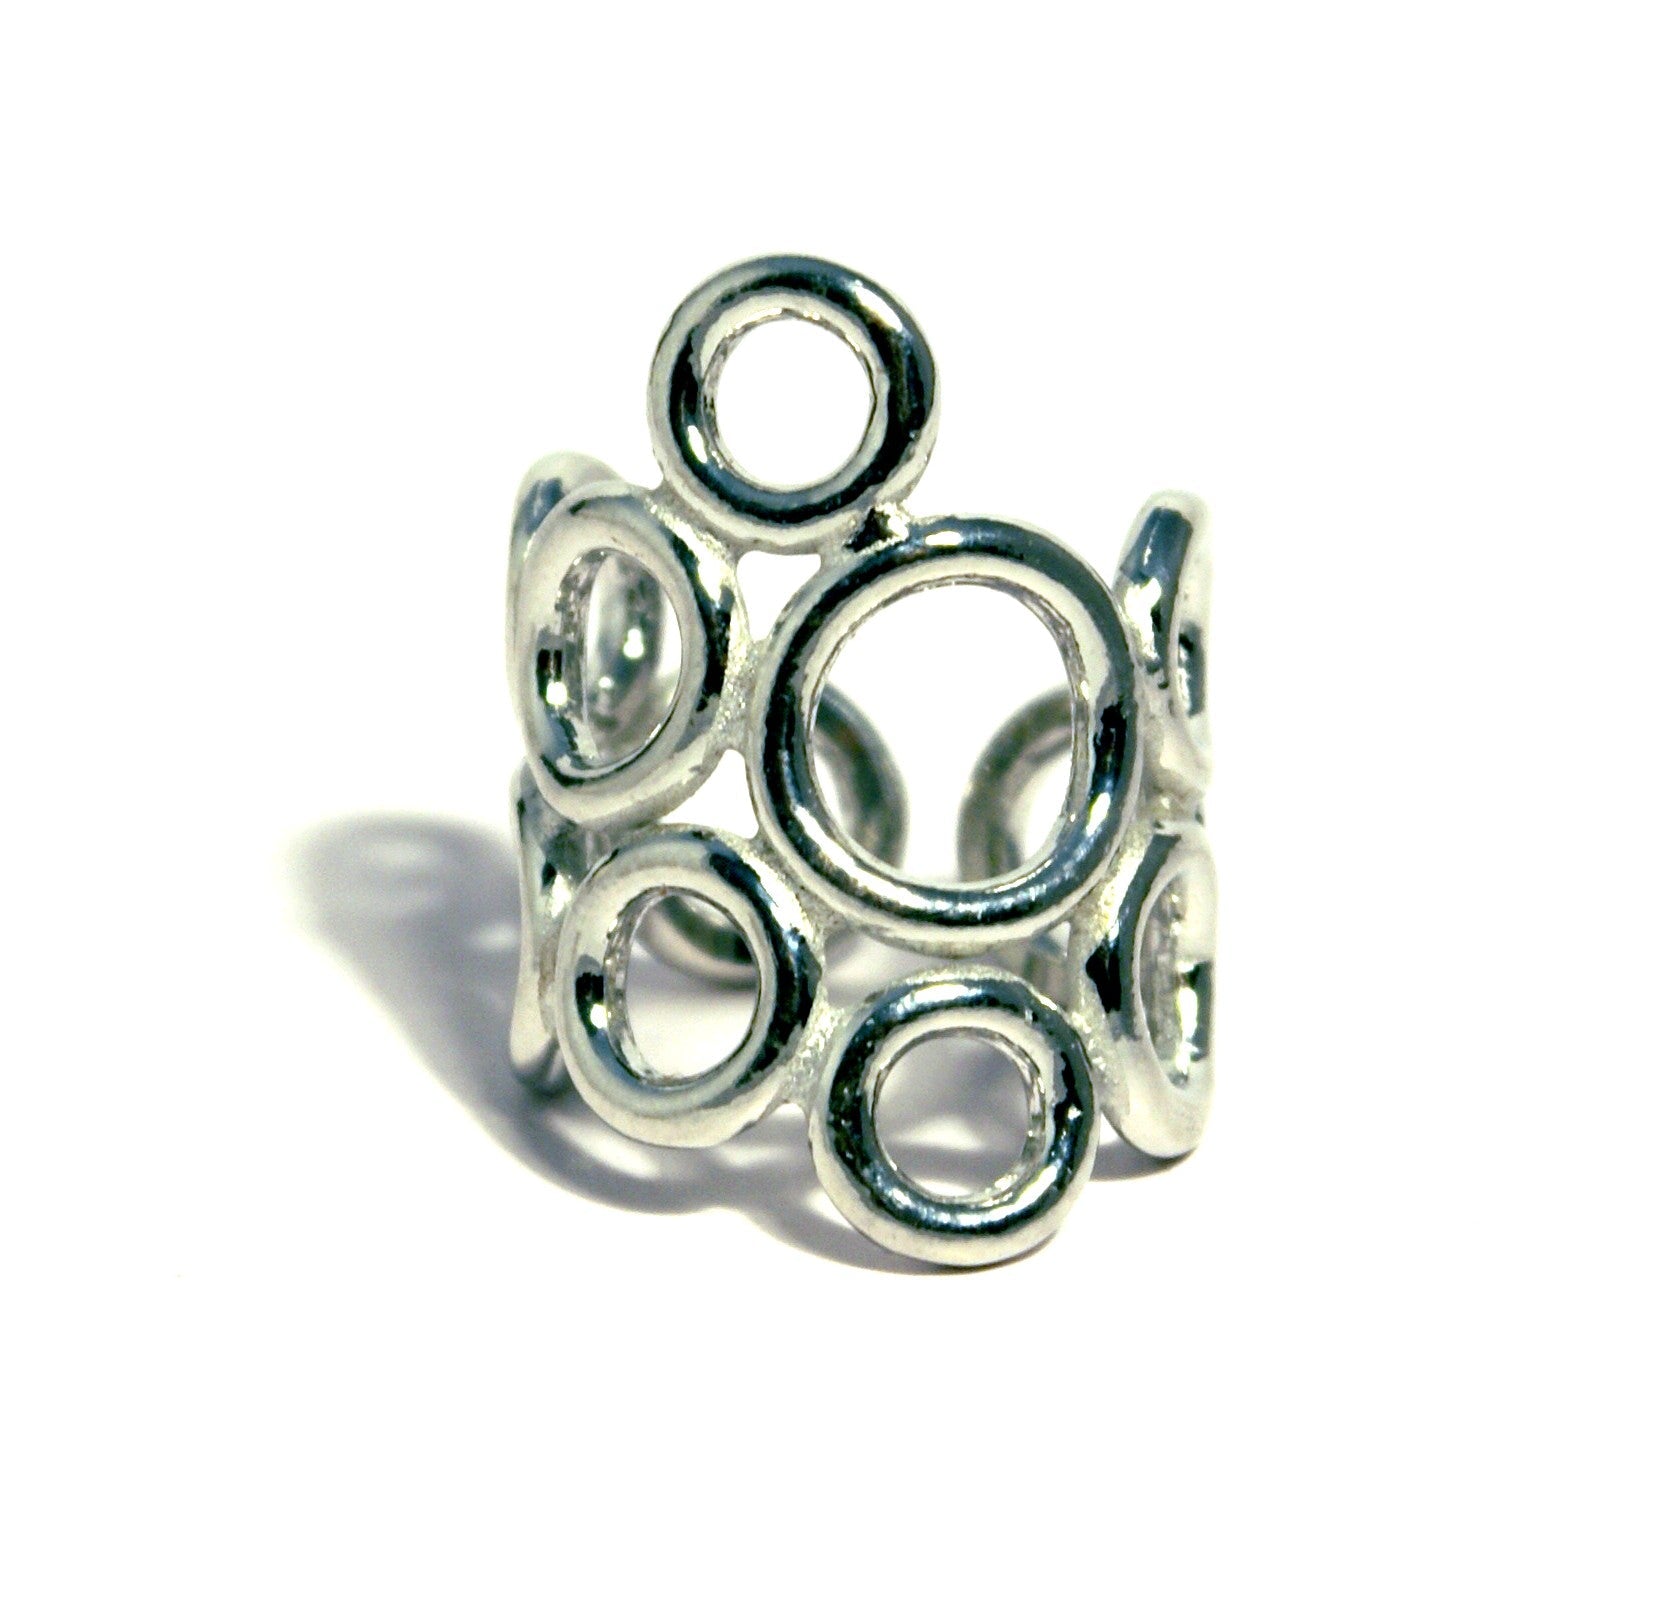 Pewter Ring - The Nancy Smillie Shop - Art, Jewellery & Designer Gifts Glasgow